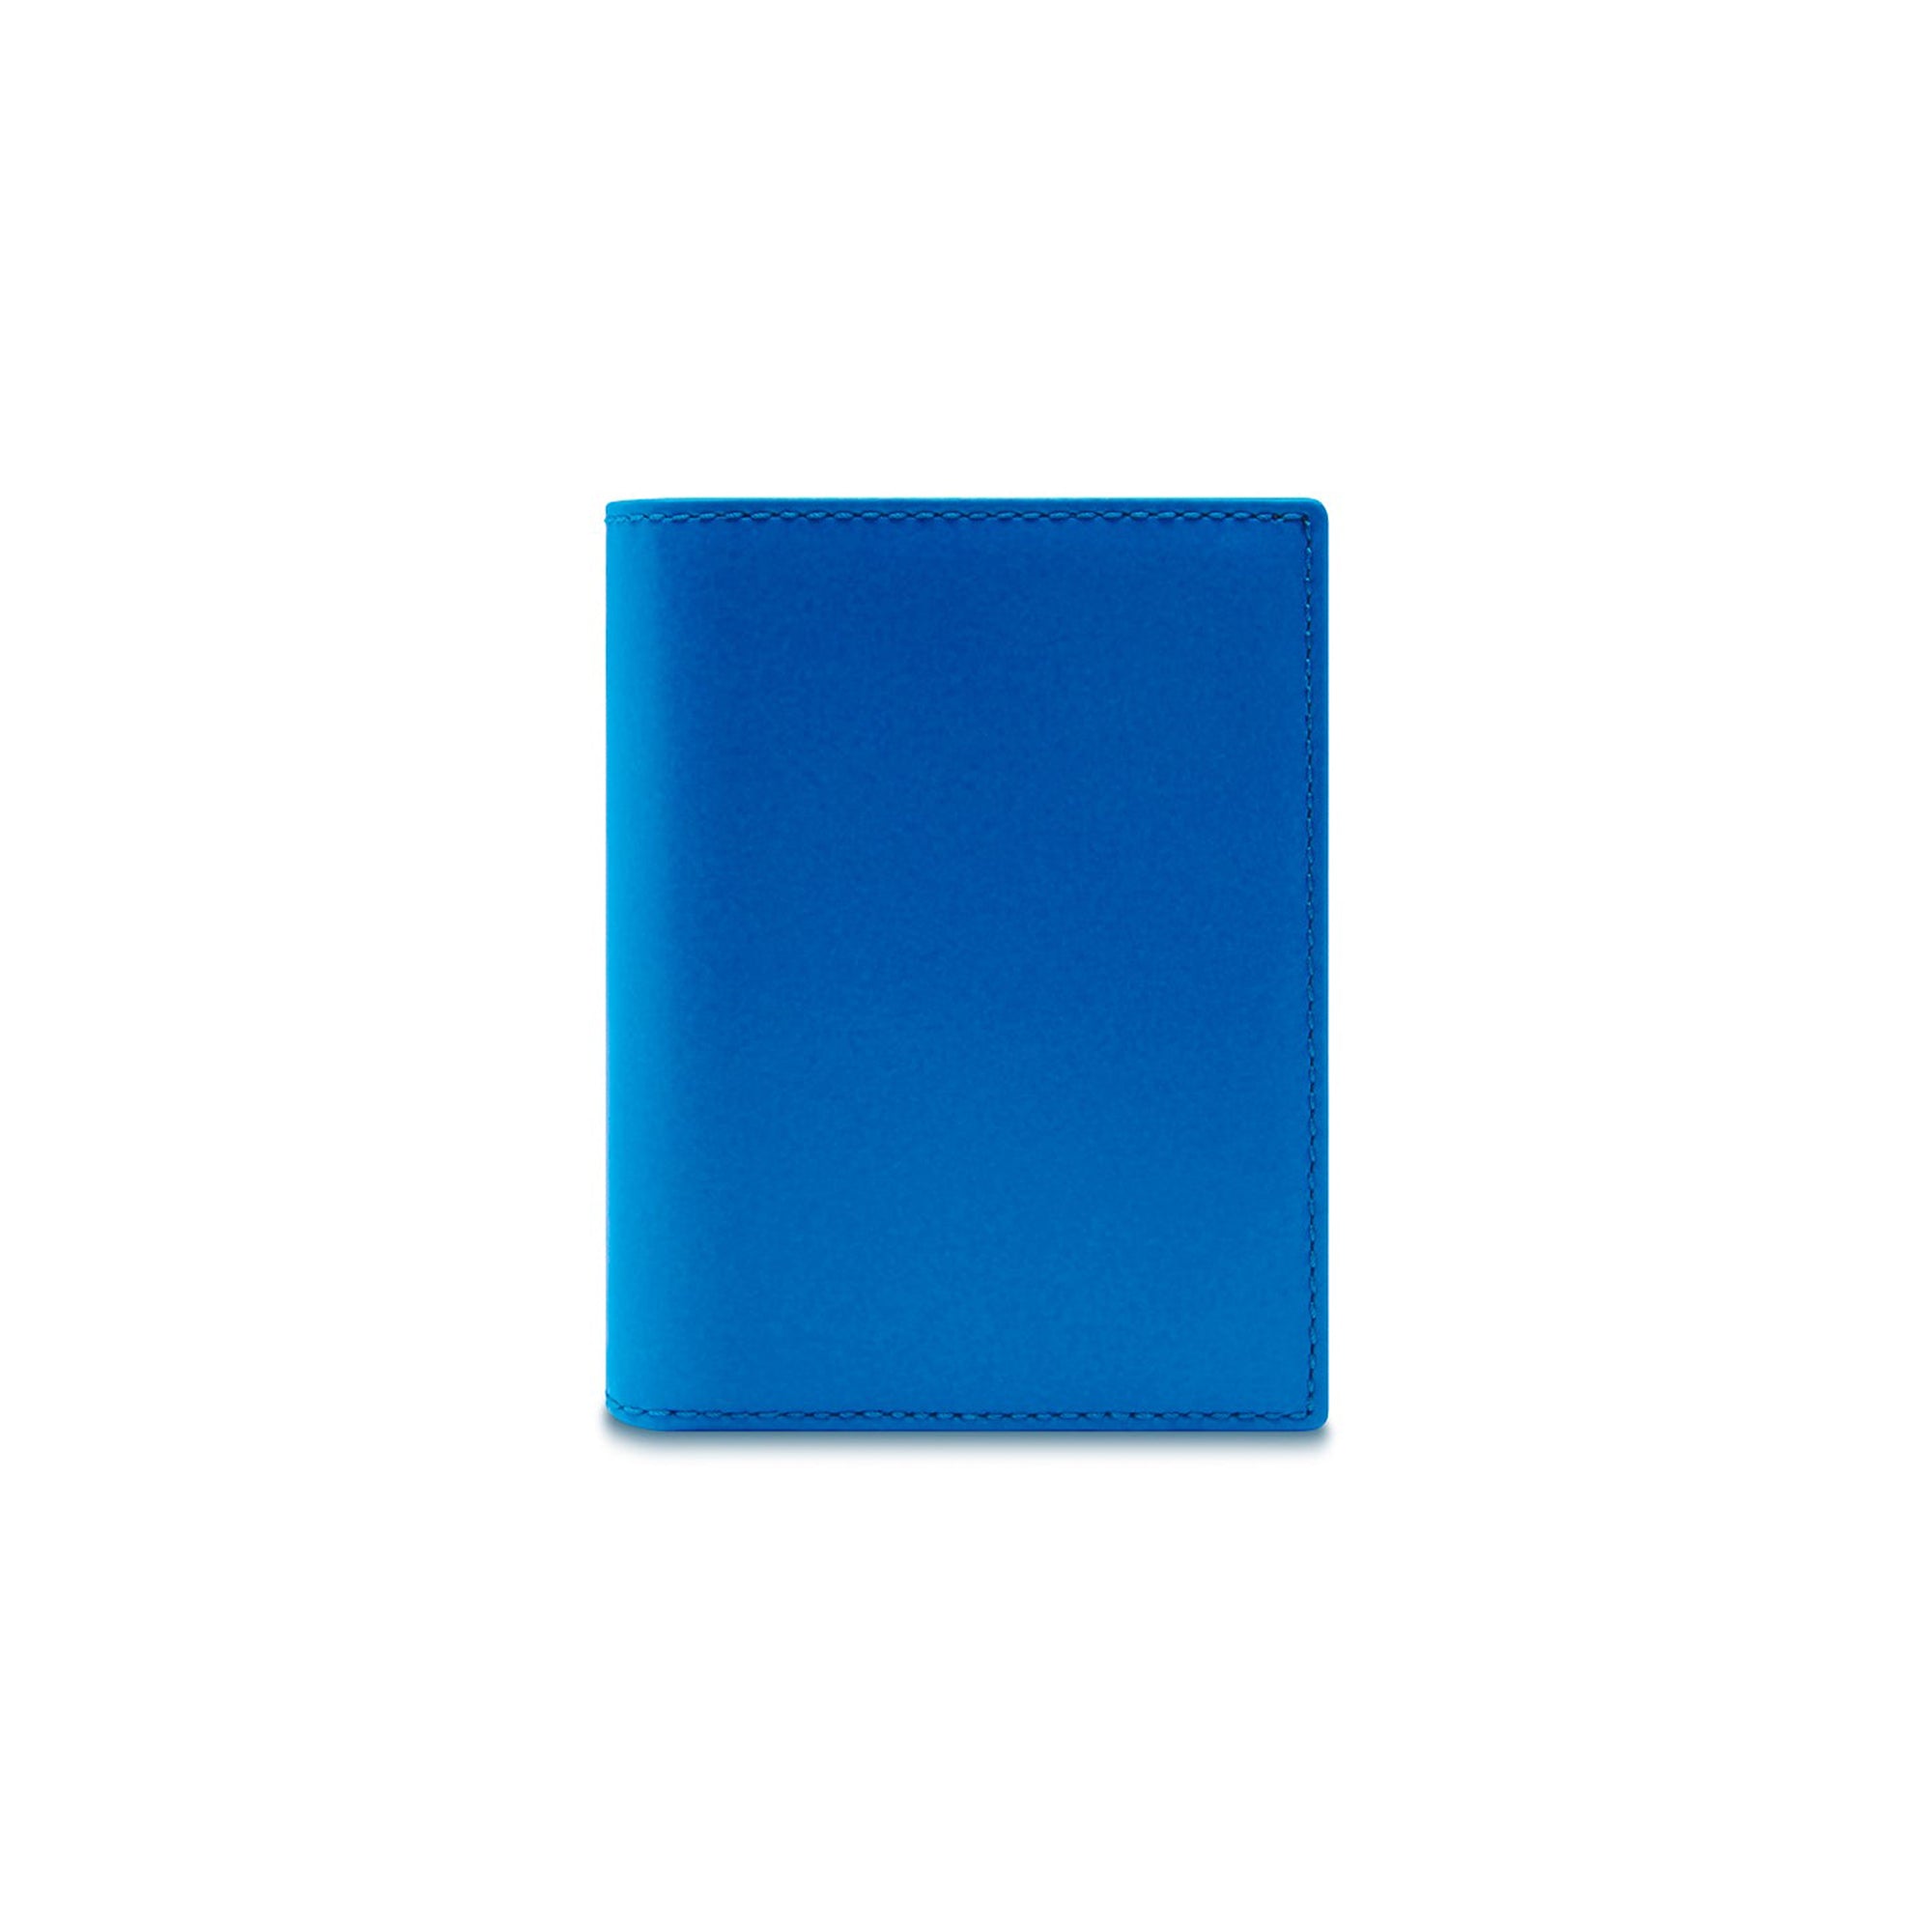 CDG Wallet - Super Fluo Blue/Green Bifold Wallet - (SA0641SF) view 1